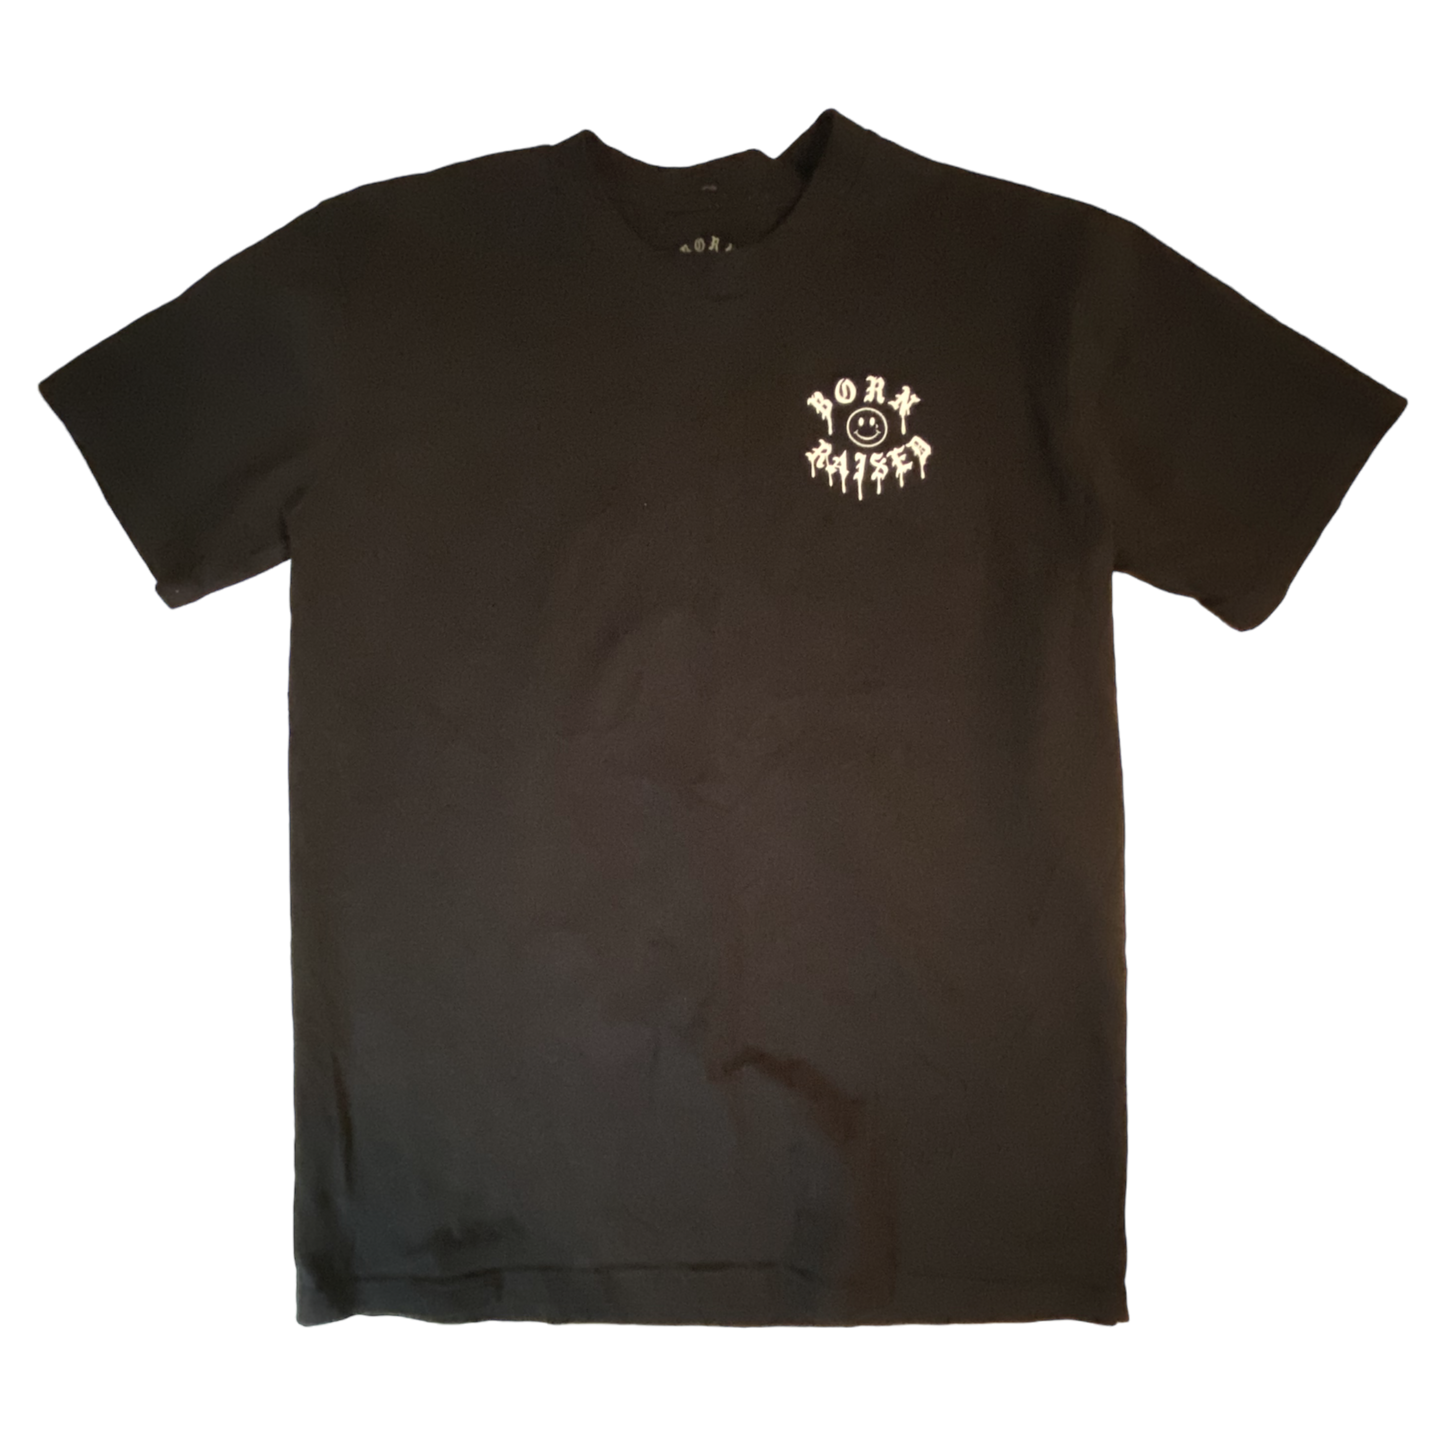 Born x Raised - Cholos On Acid Black Graphic T-Shirt